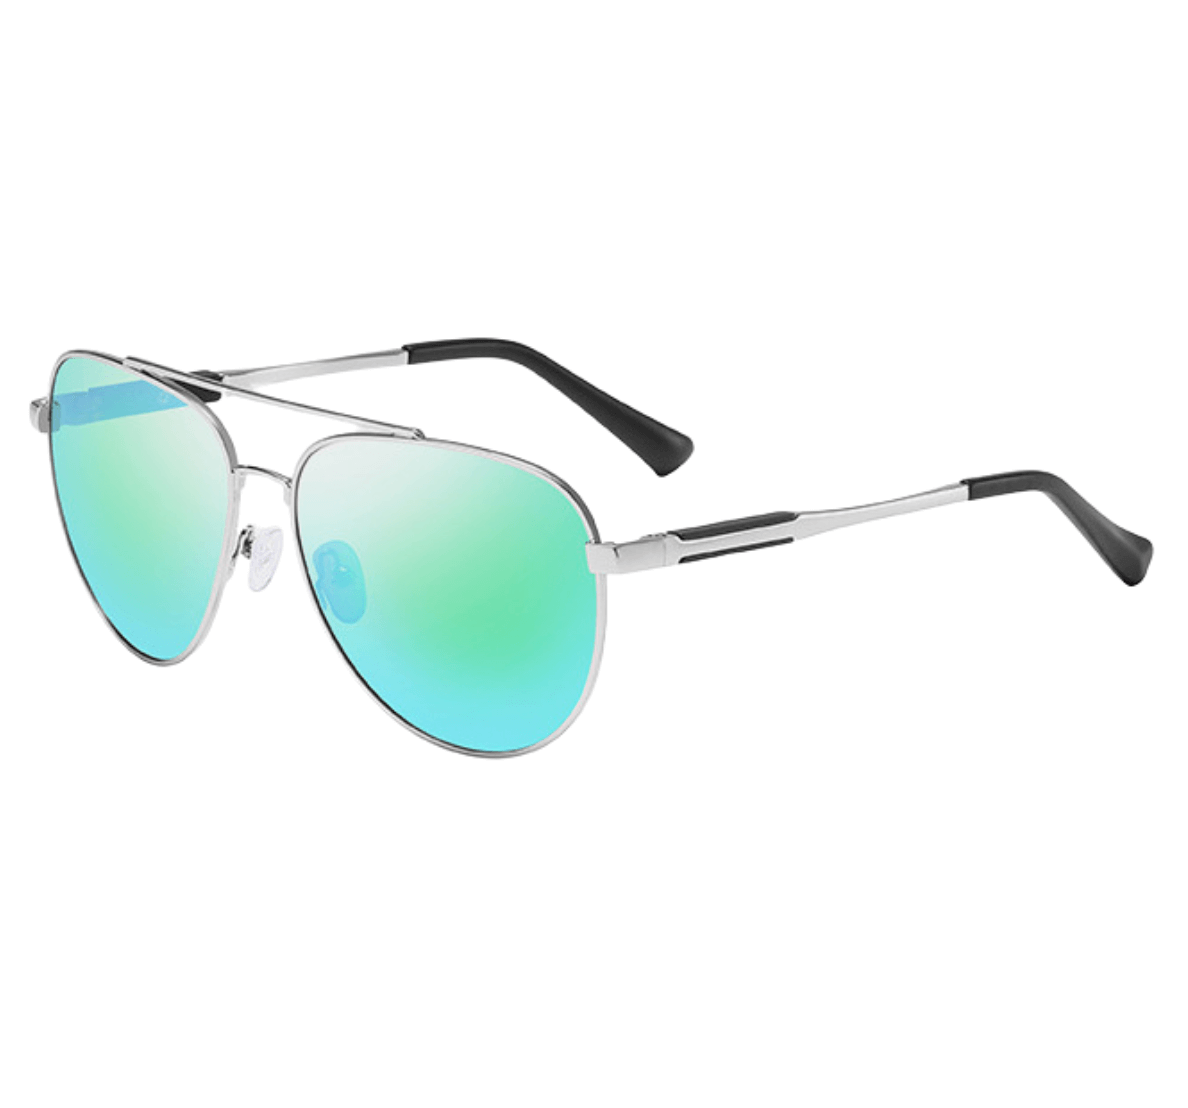 Wholesale Blue Aviator Sunglasses Cheap, blue lens aviator sunglasses, sunglasses factory in China, wholesale sunglasses